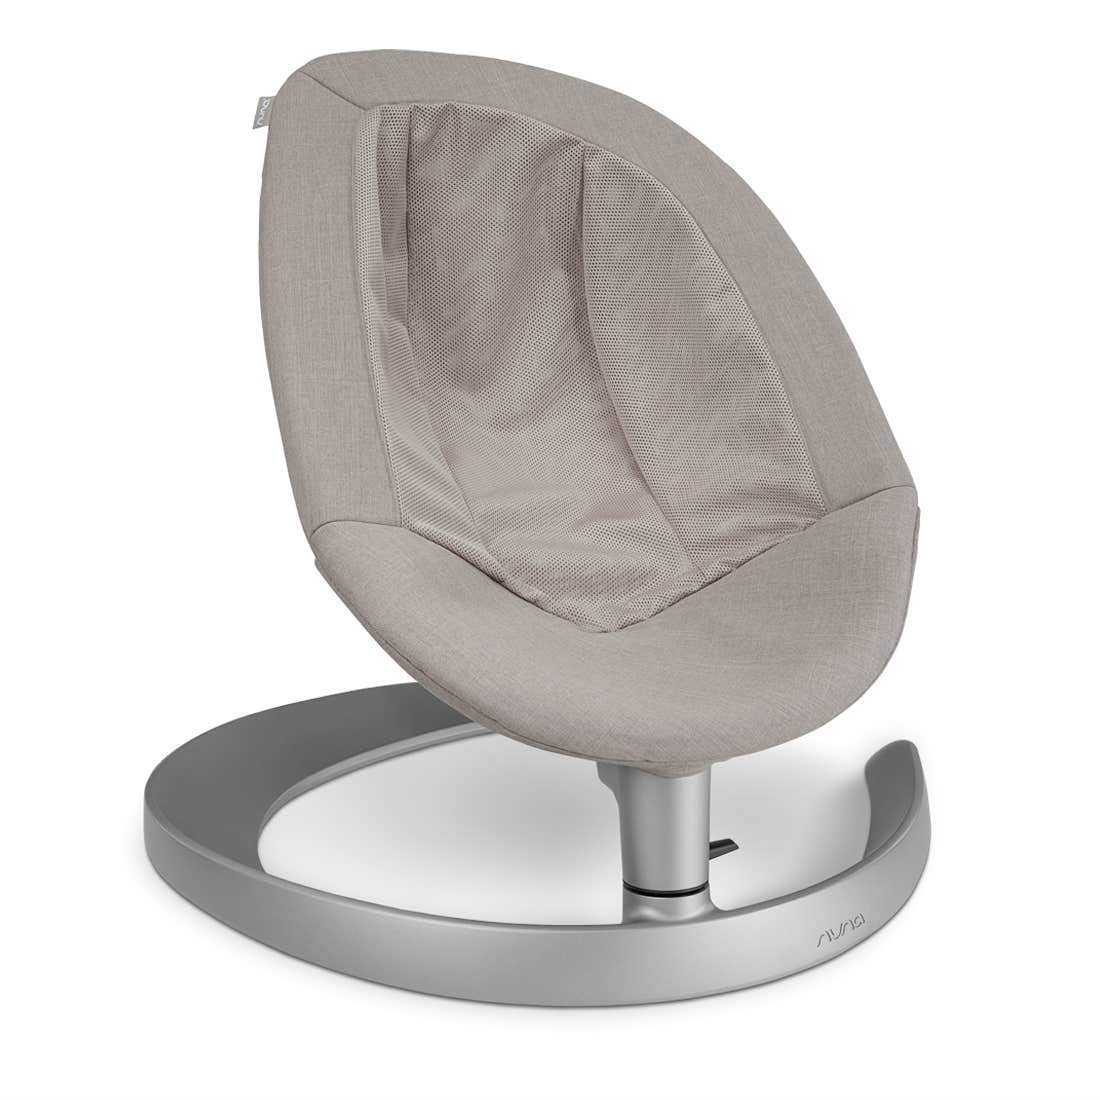 LEAF Grow Baby Seat - Quartz